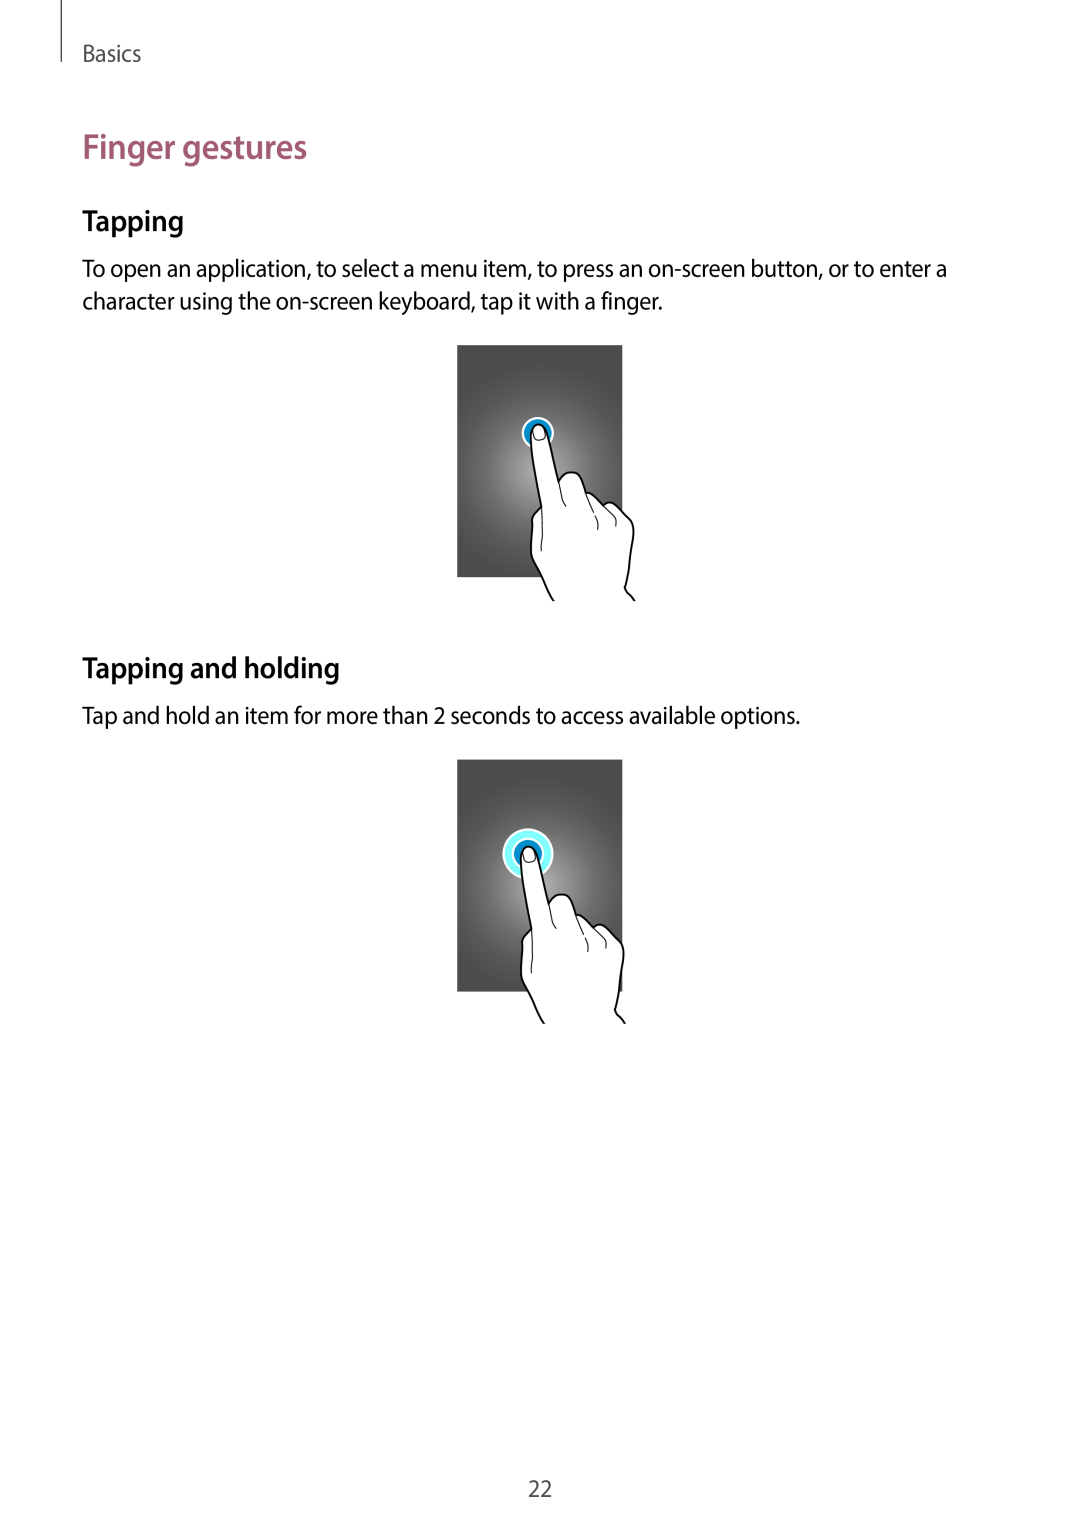 Samsung SM-G7105ZKAROM, SM-G7105ZKAATO, SM-G7105ZWAATO, SM-G7105ZKATUR manual Finger gestures, Tapping and holding, Basics 